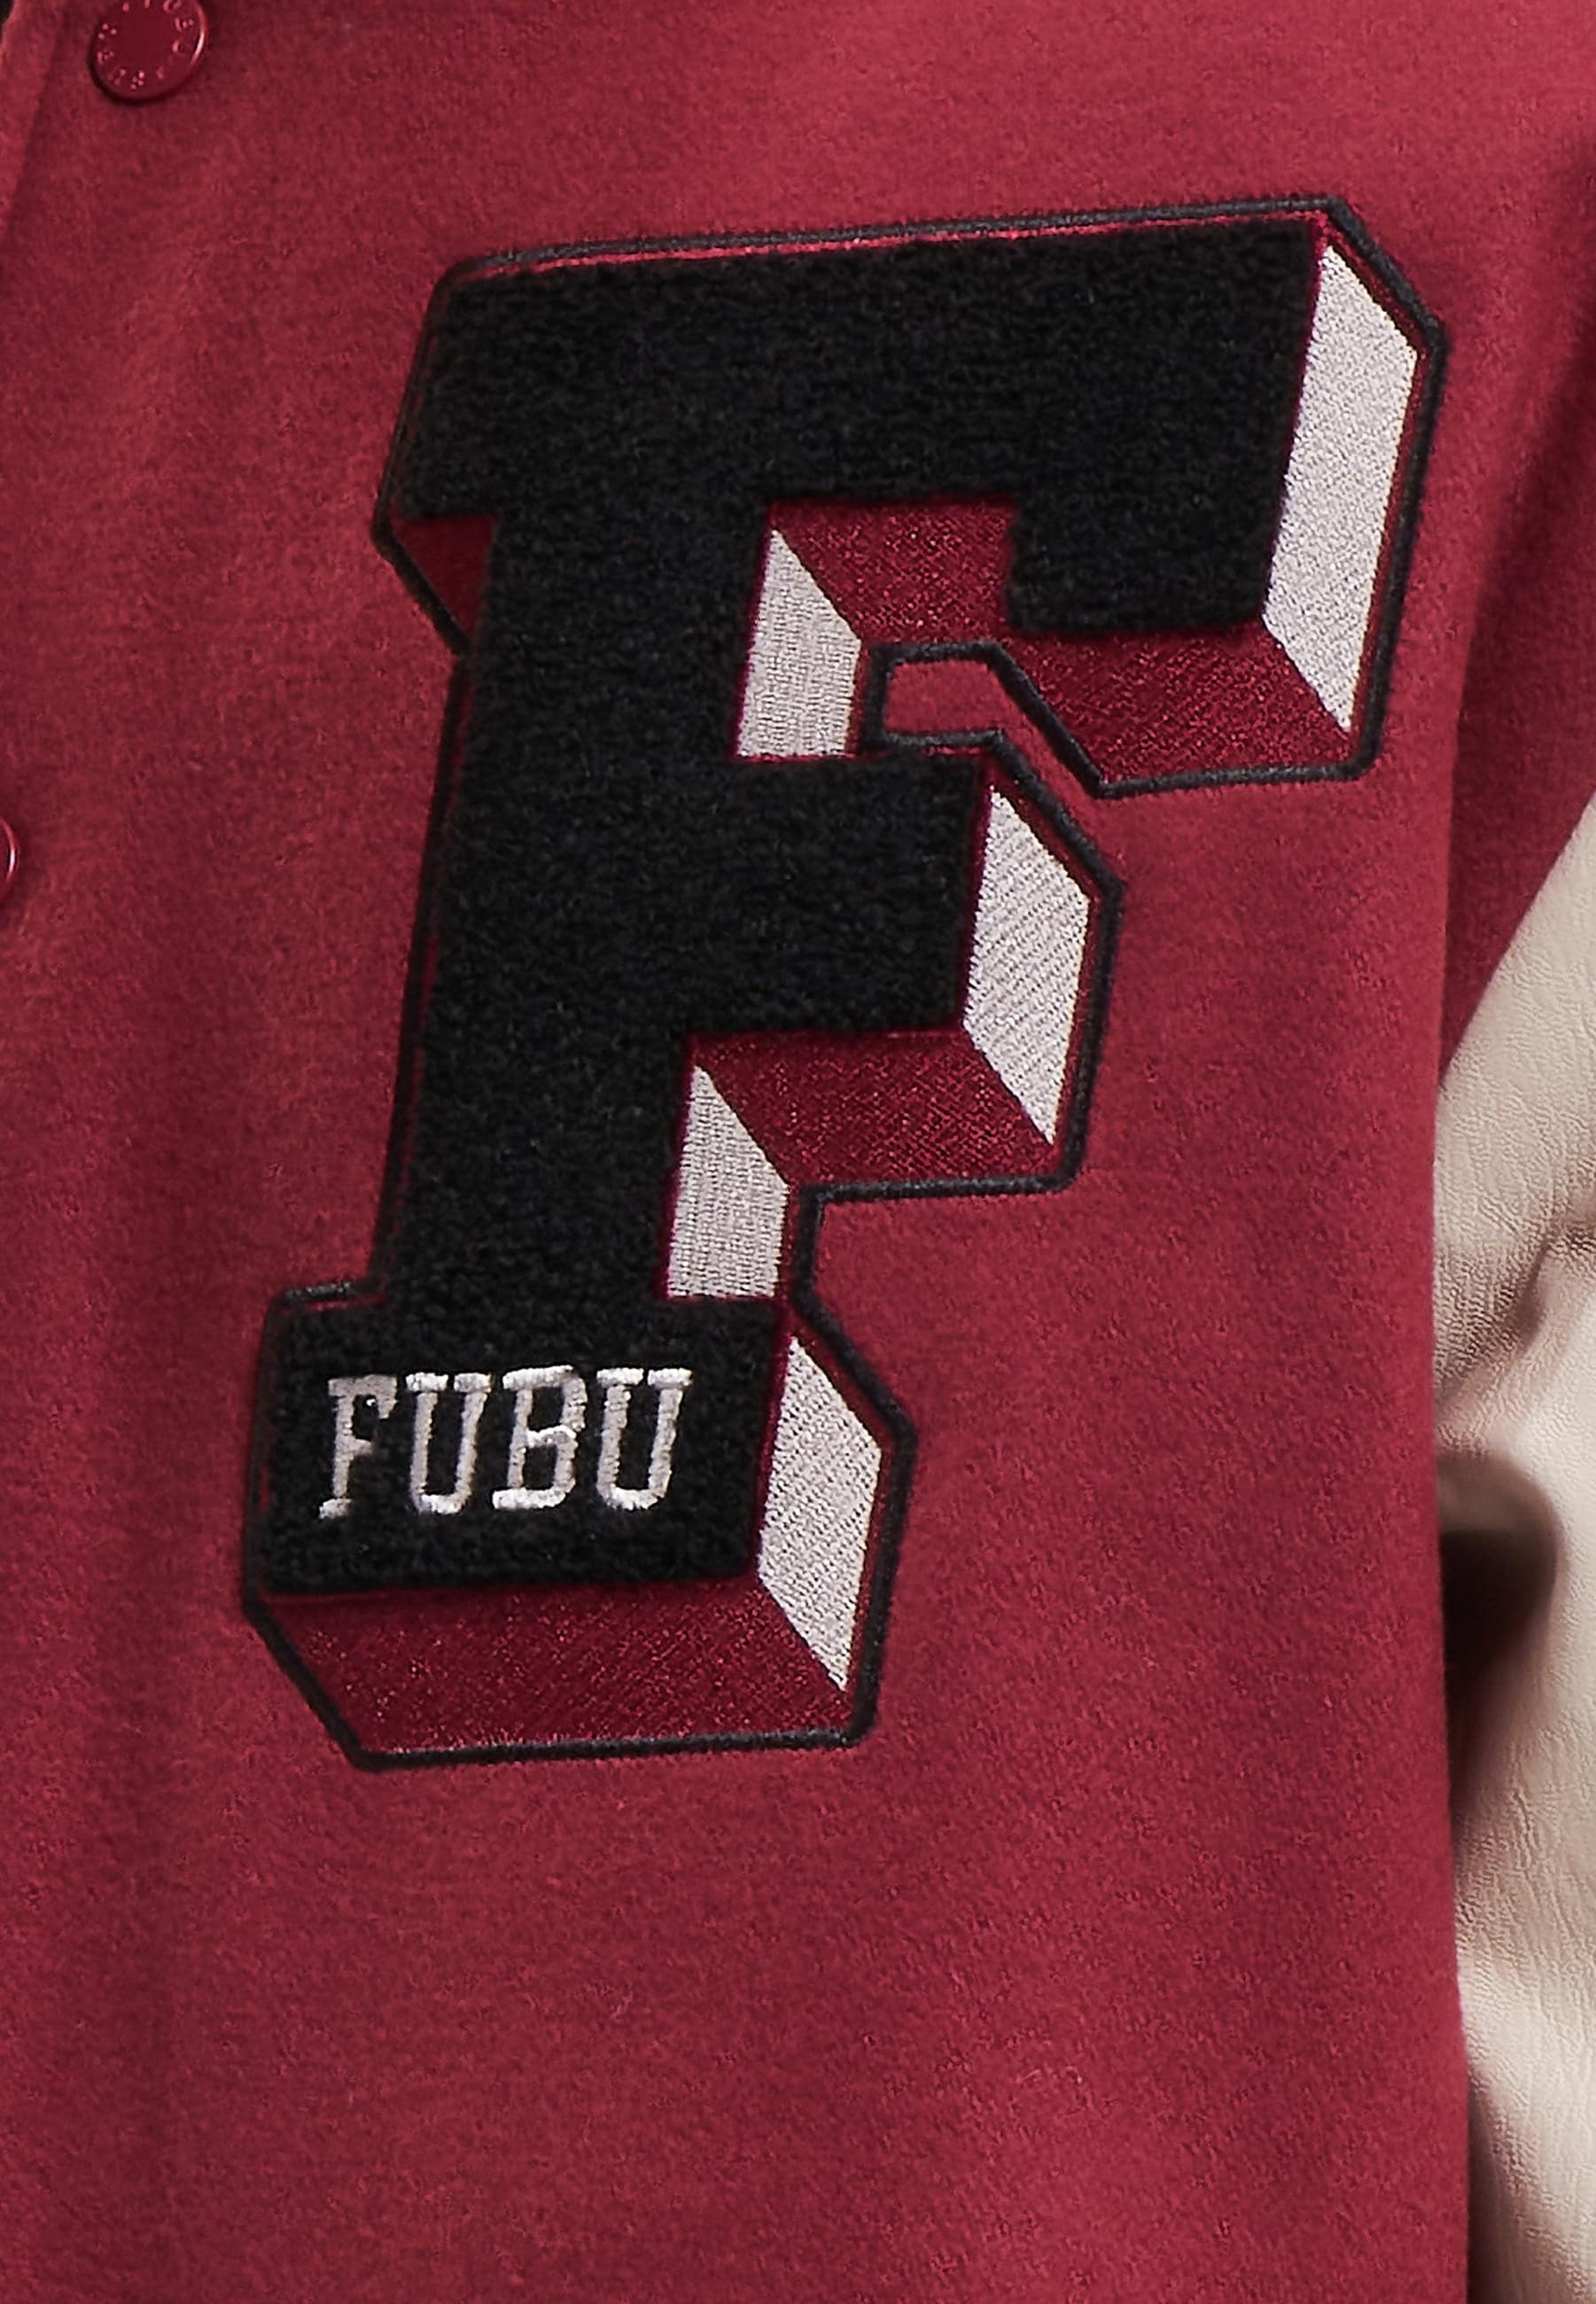 Fubu Bomberjacke »Fubu Herren FM233-009-1 FUBU College Varsity Jacket«, (1 St.), ohne Kapuze